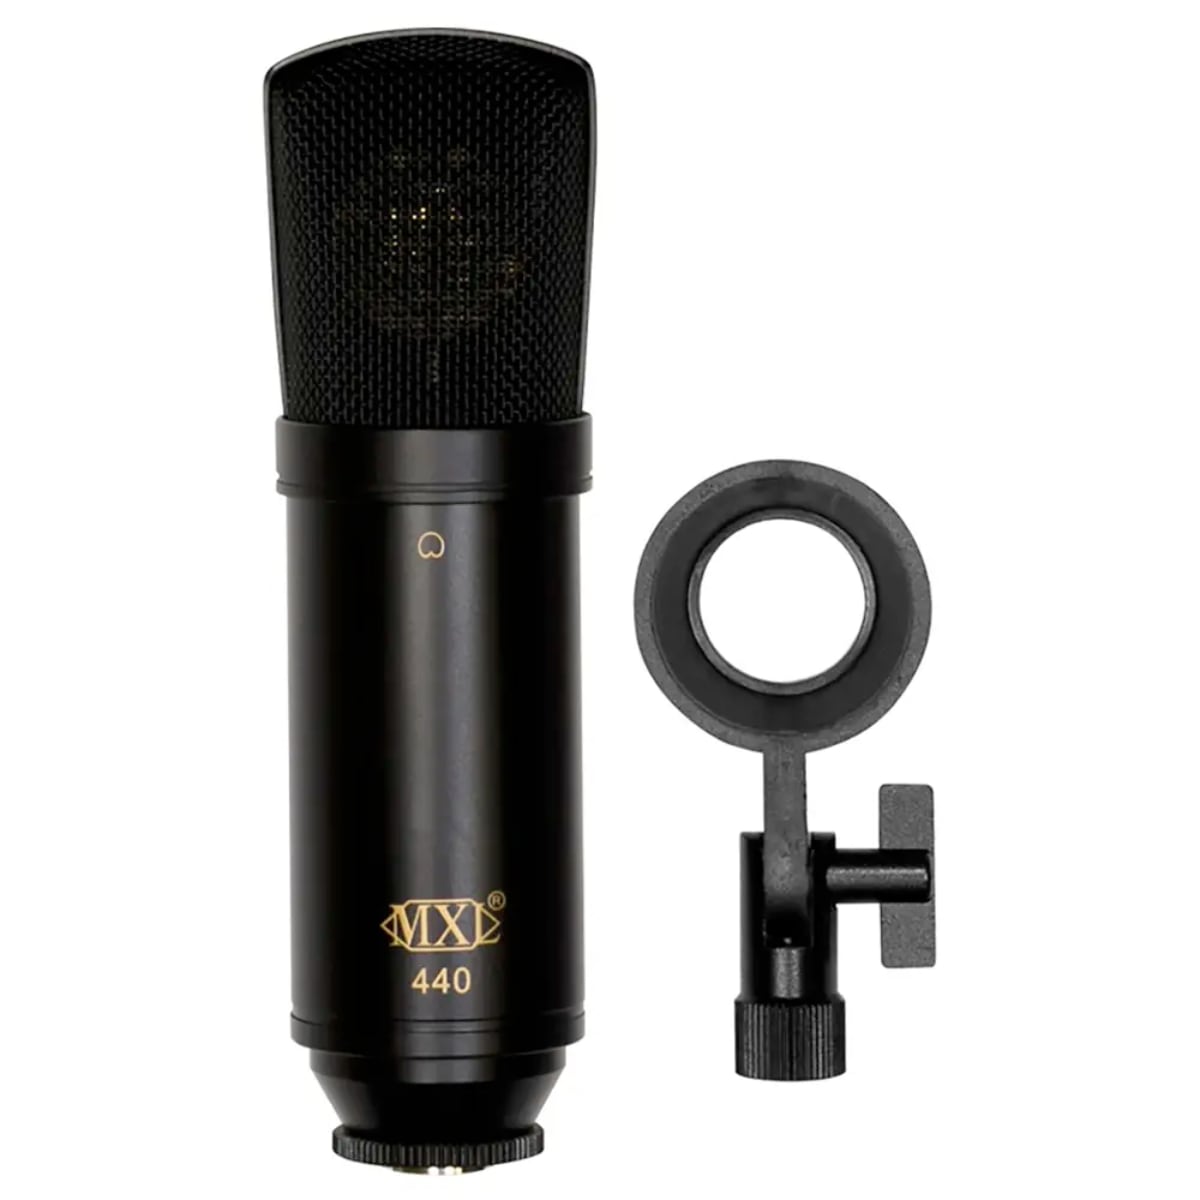 MXL 440 Professional large-diaphragm condenser microphone